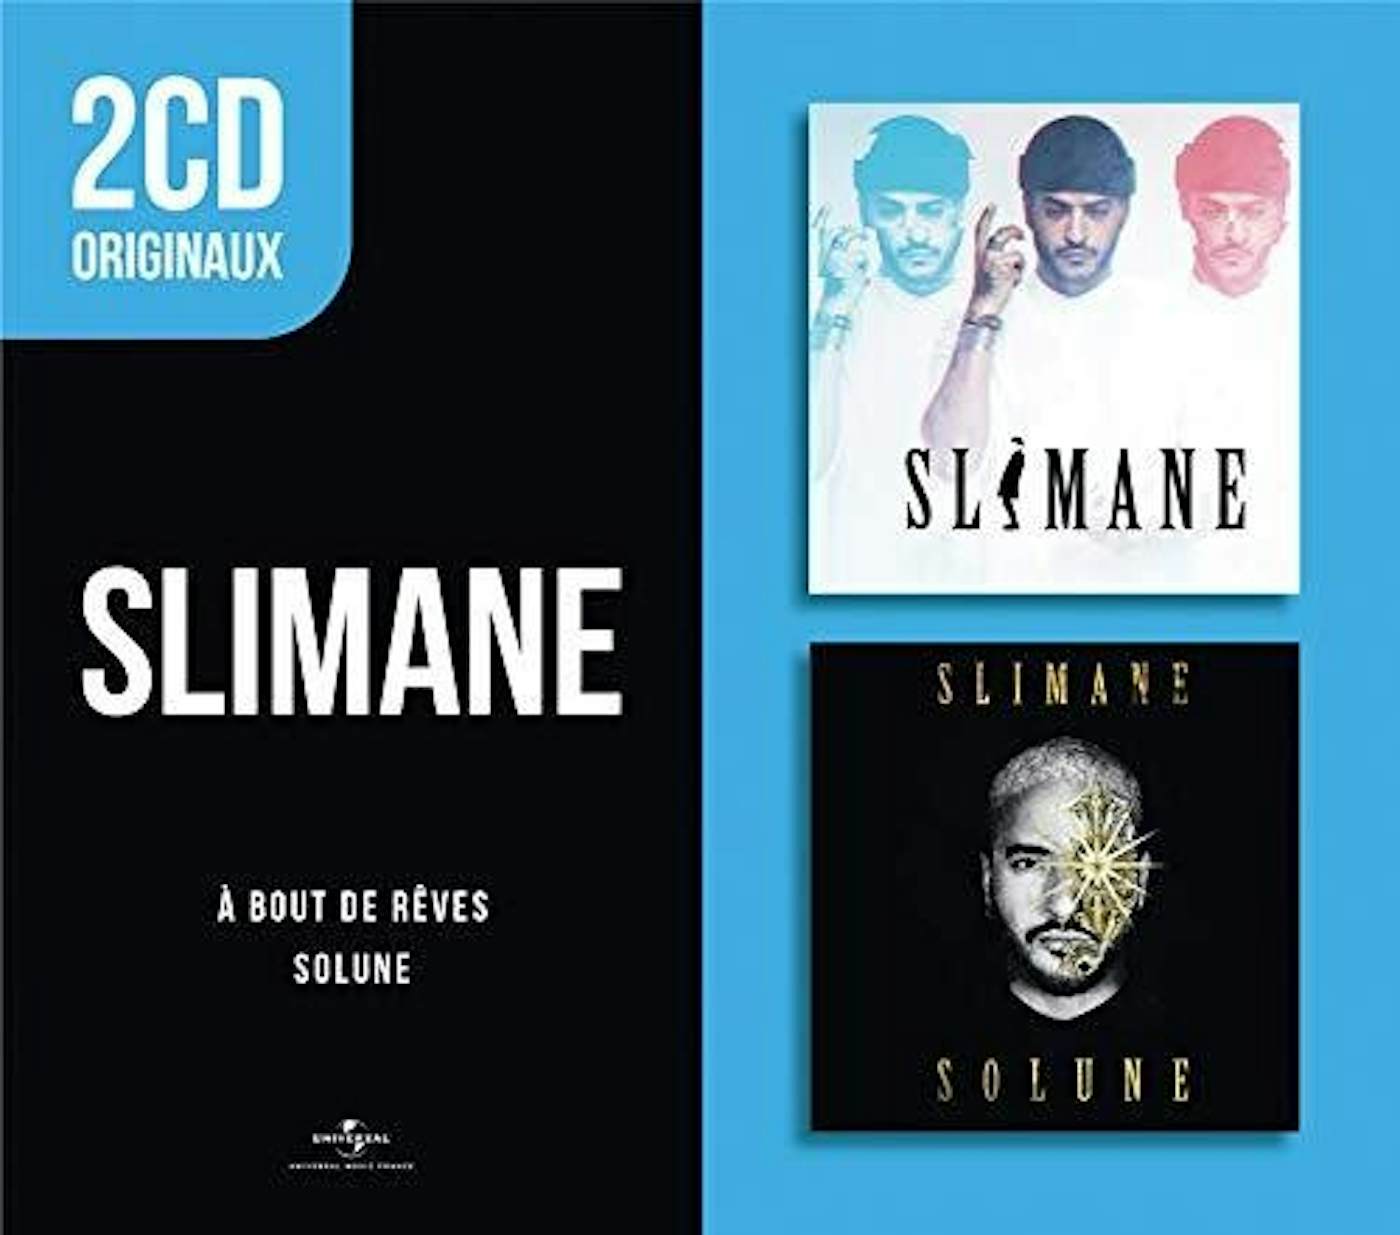 2CD Originaux: À Bout de Rêves/Solune: Slimane, Slimane